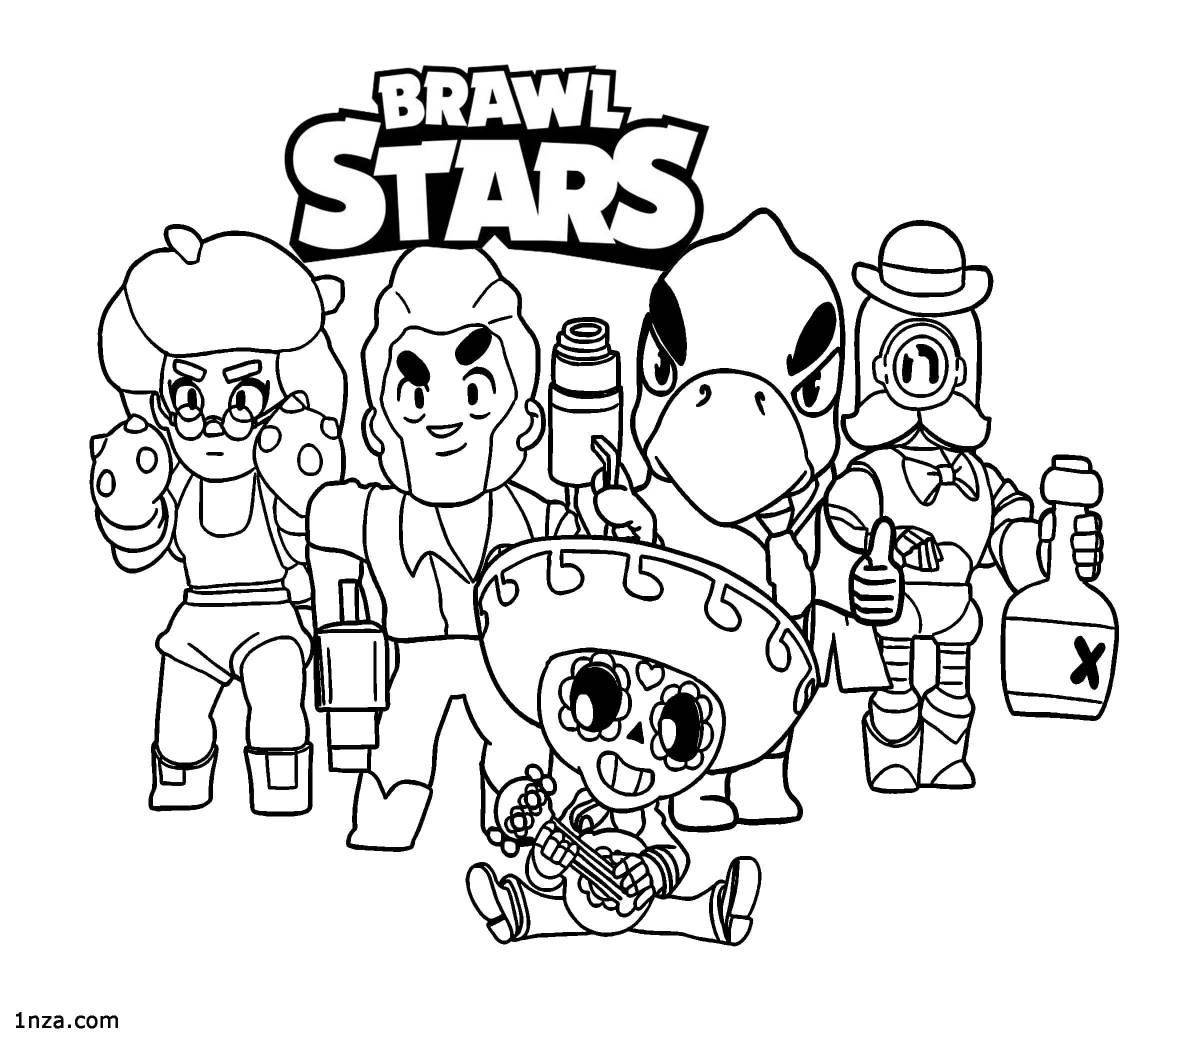 Bravo stars fun coloring book